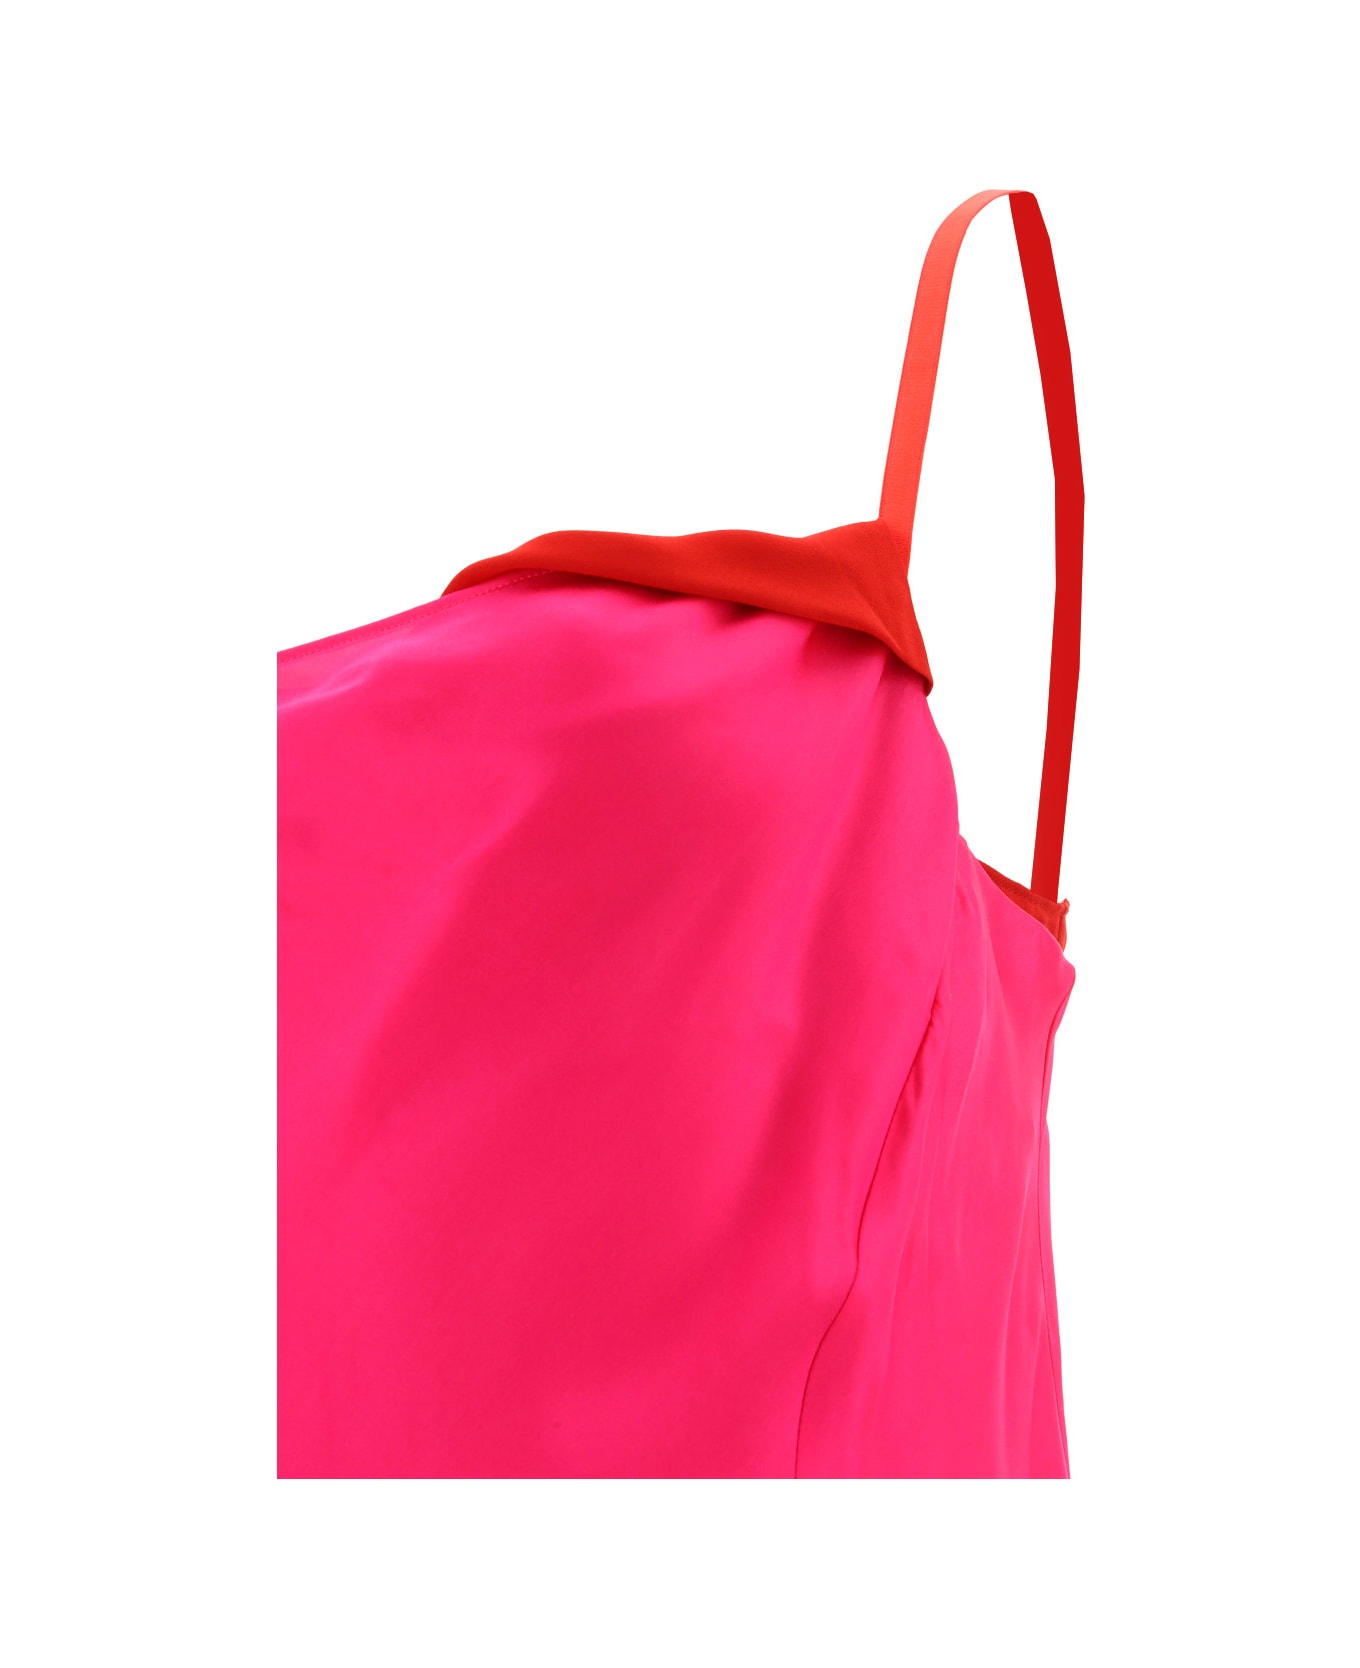 Acne Studios Wrap Dress - Fuchsia Pink